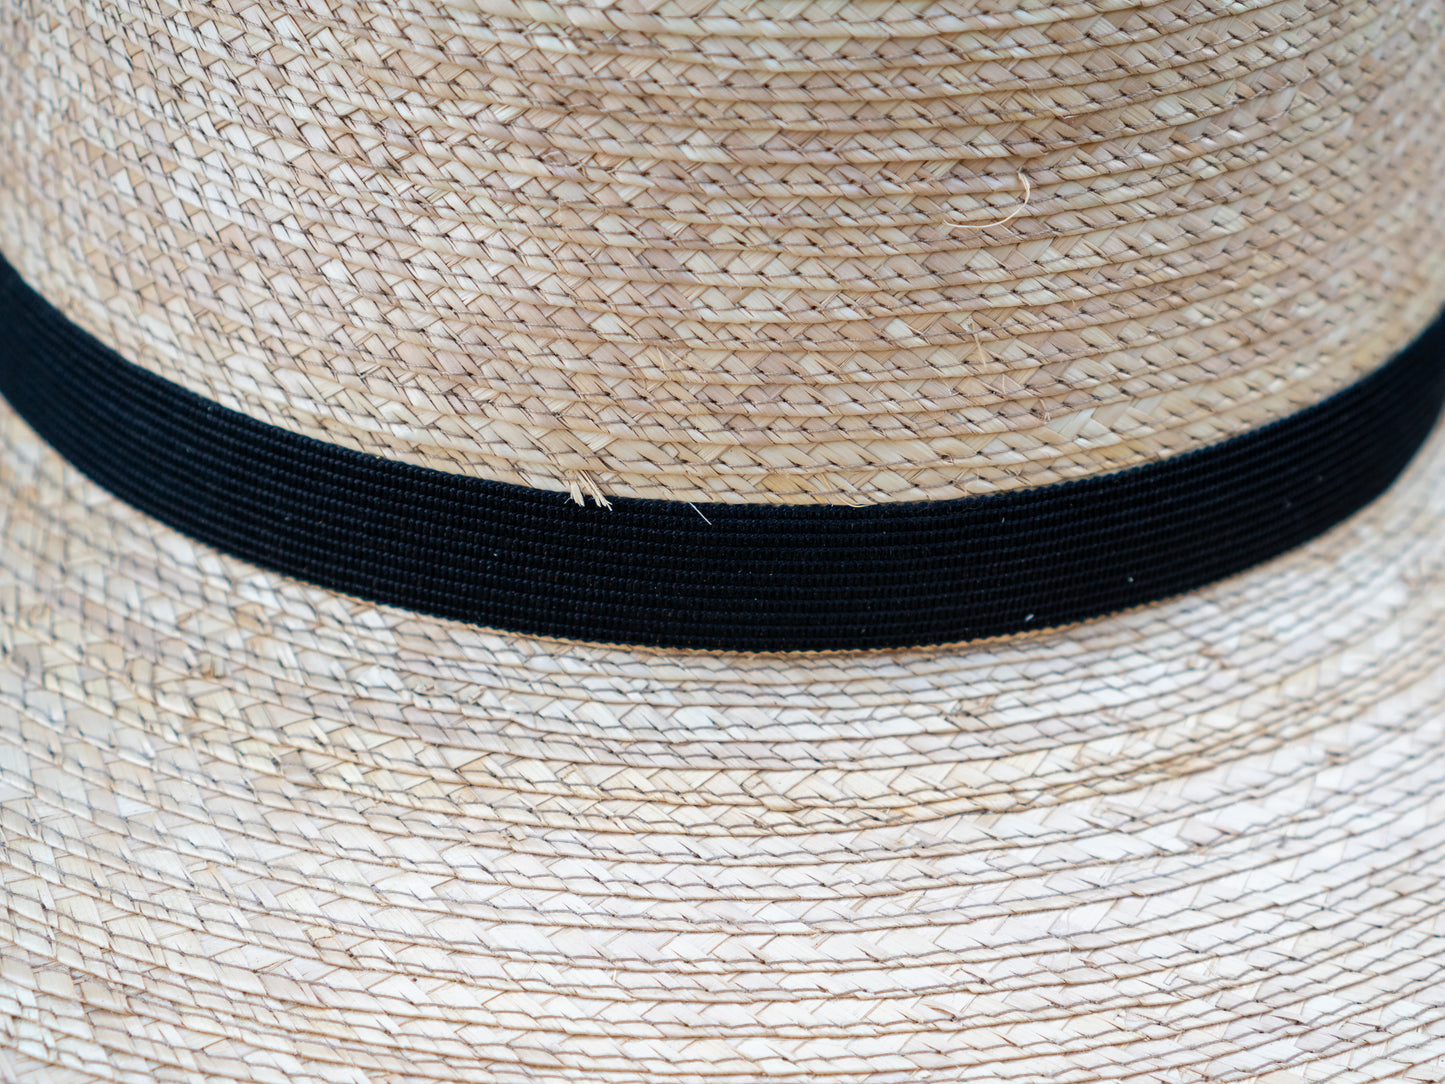 SunBody Hats Oak-Colored Palm Leaf Hat Gambler Crease Tan